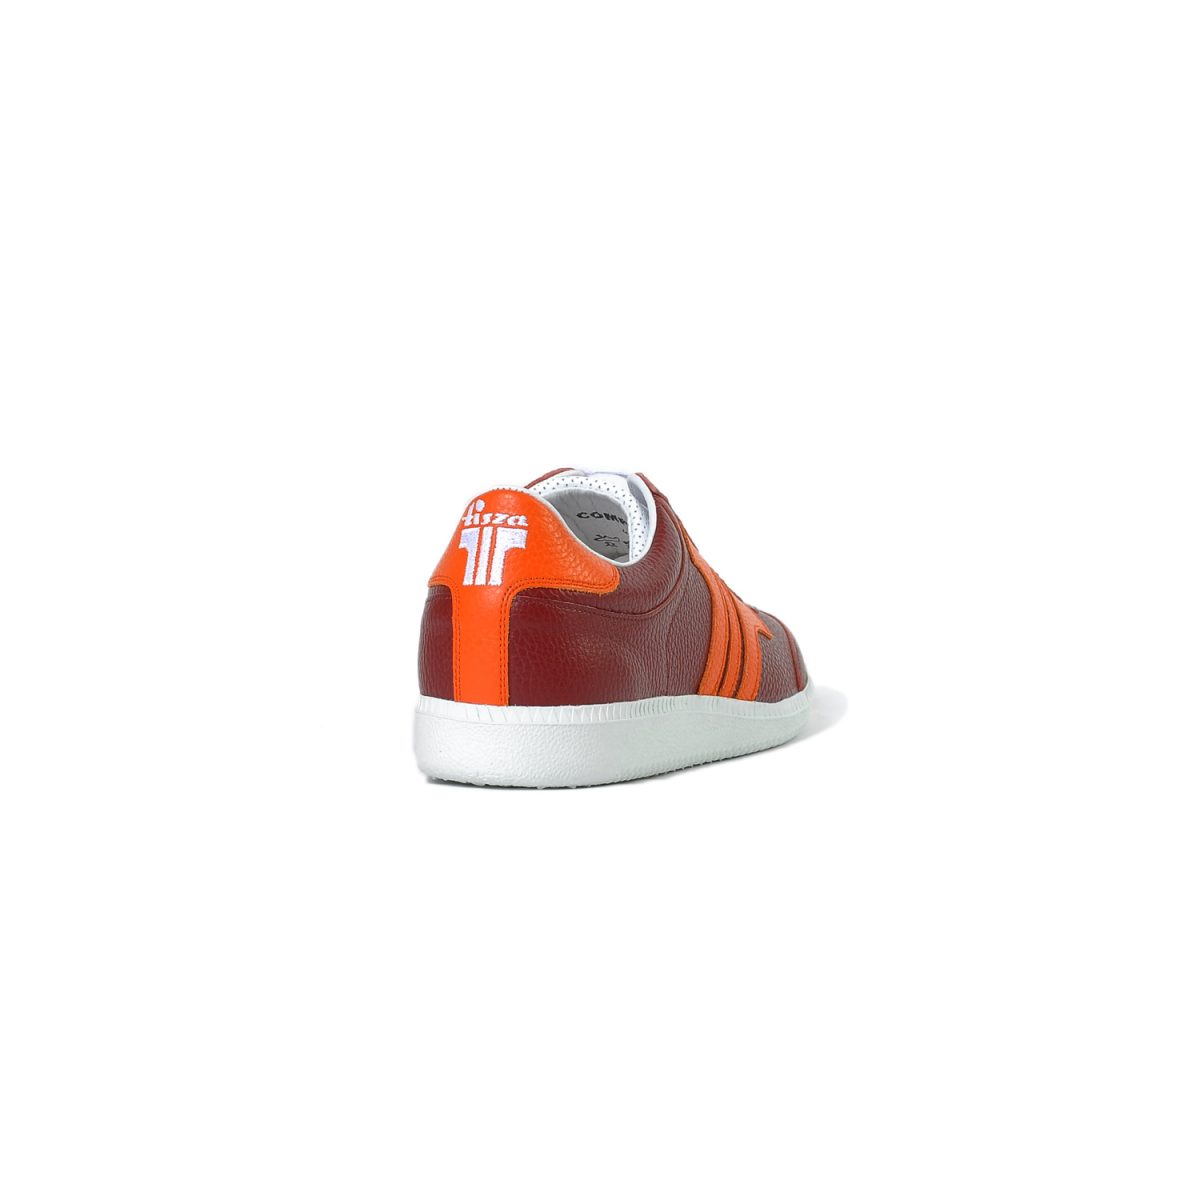 Tisza cipő - Compakt - Burgundi-narancs